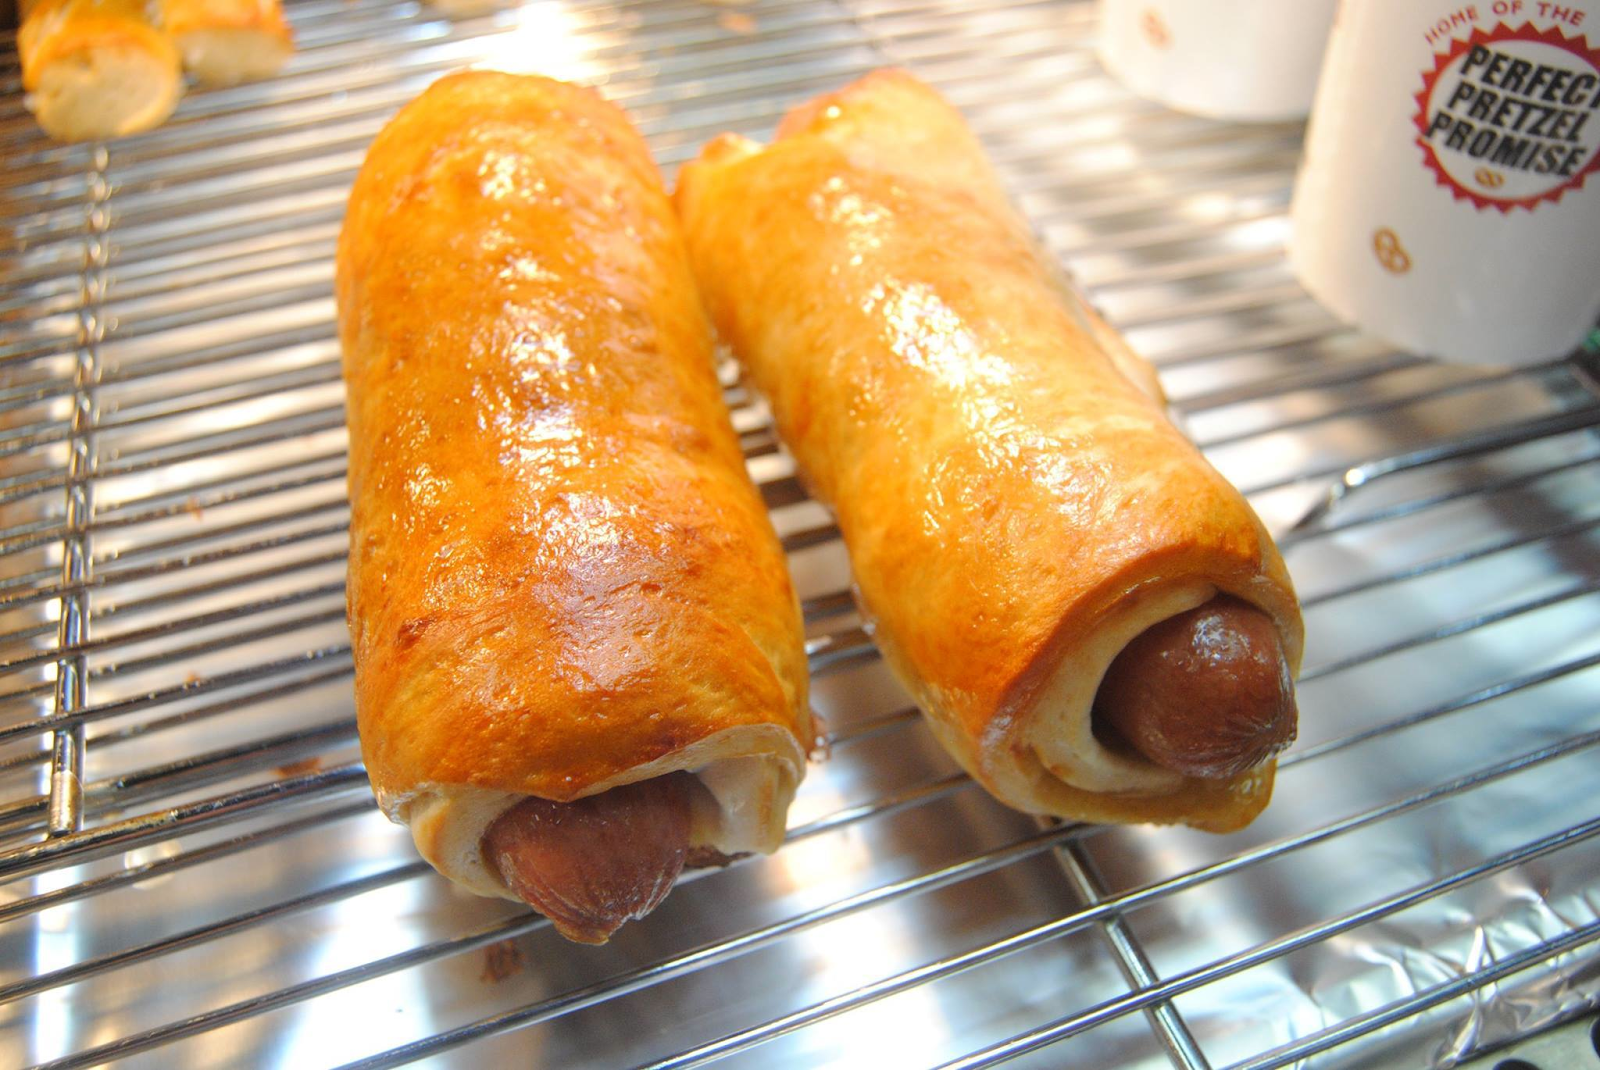 Have a jumbo pretzel dog at Ben's for National Hot Dog Day!